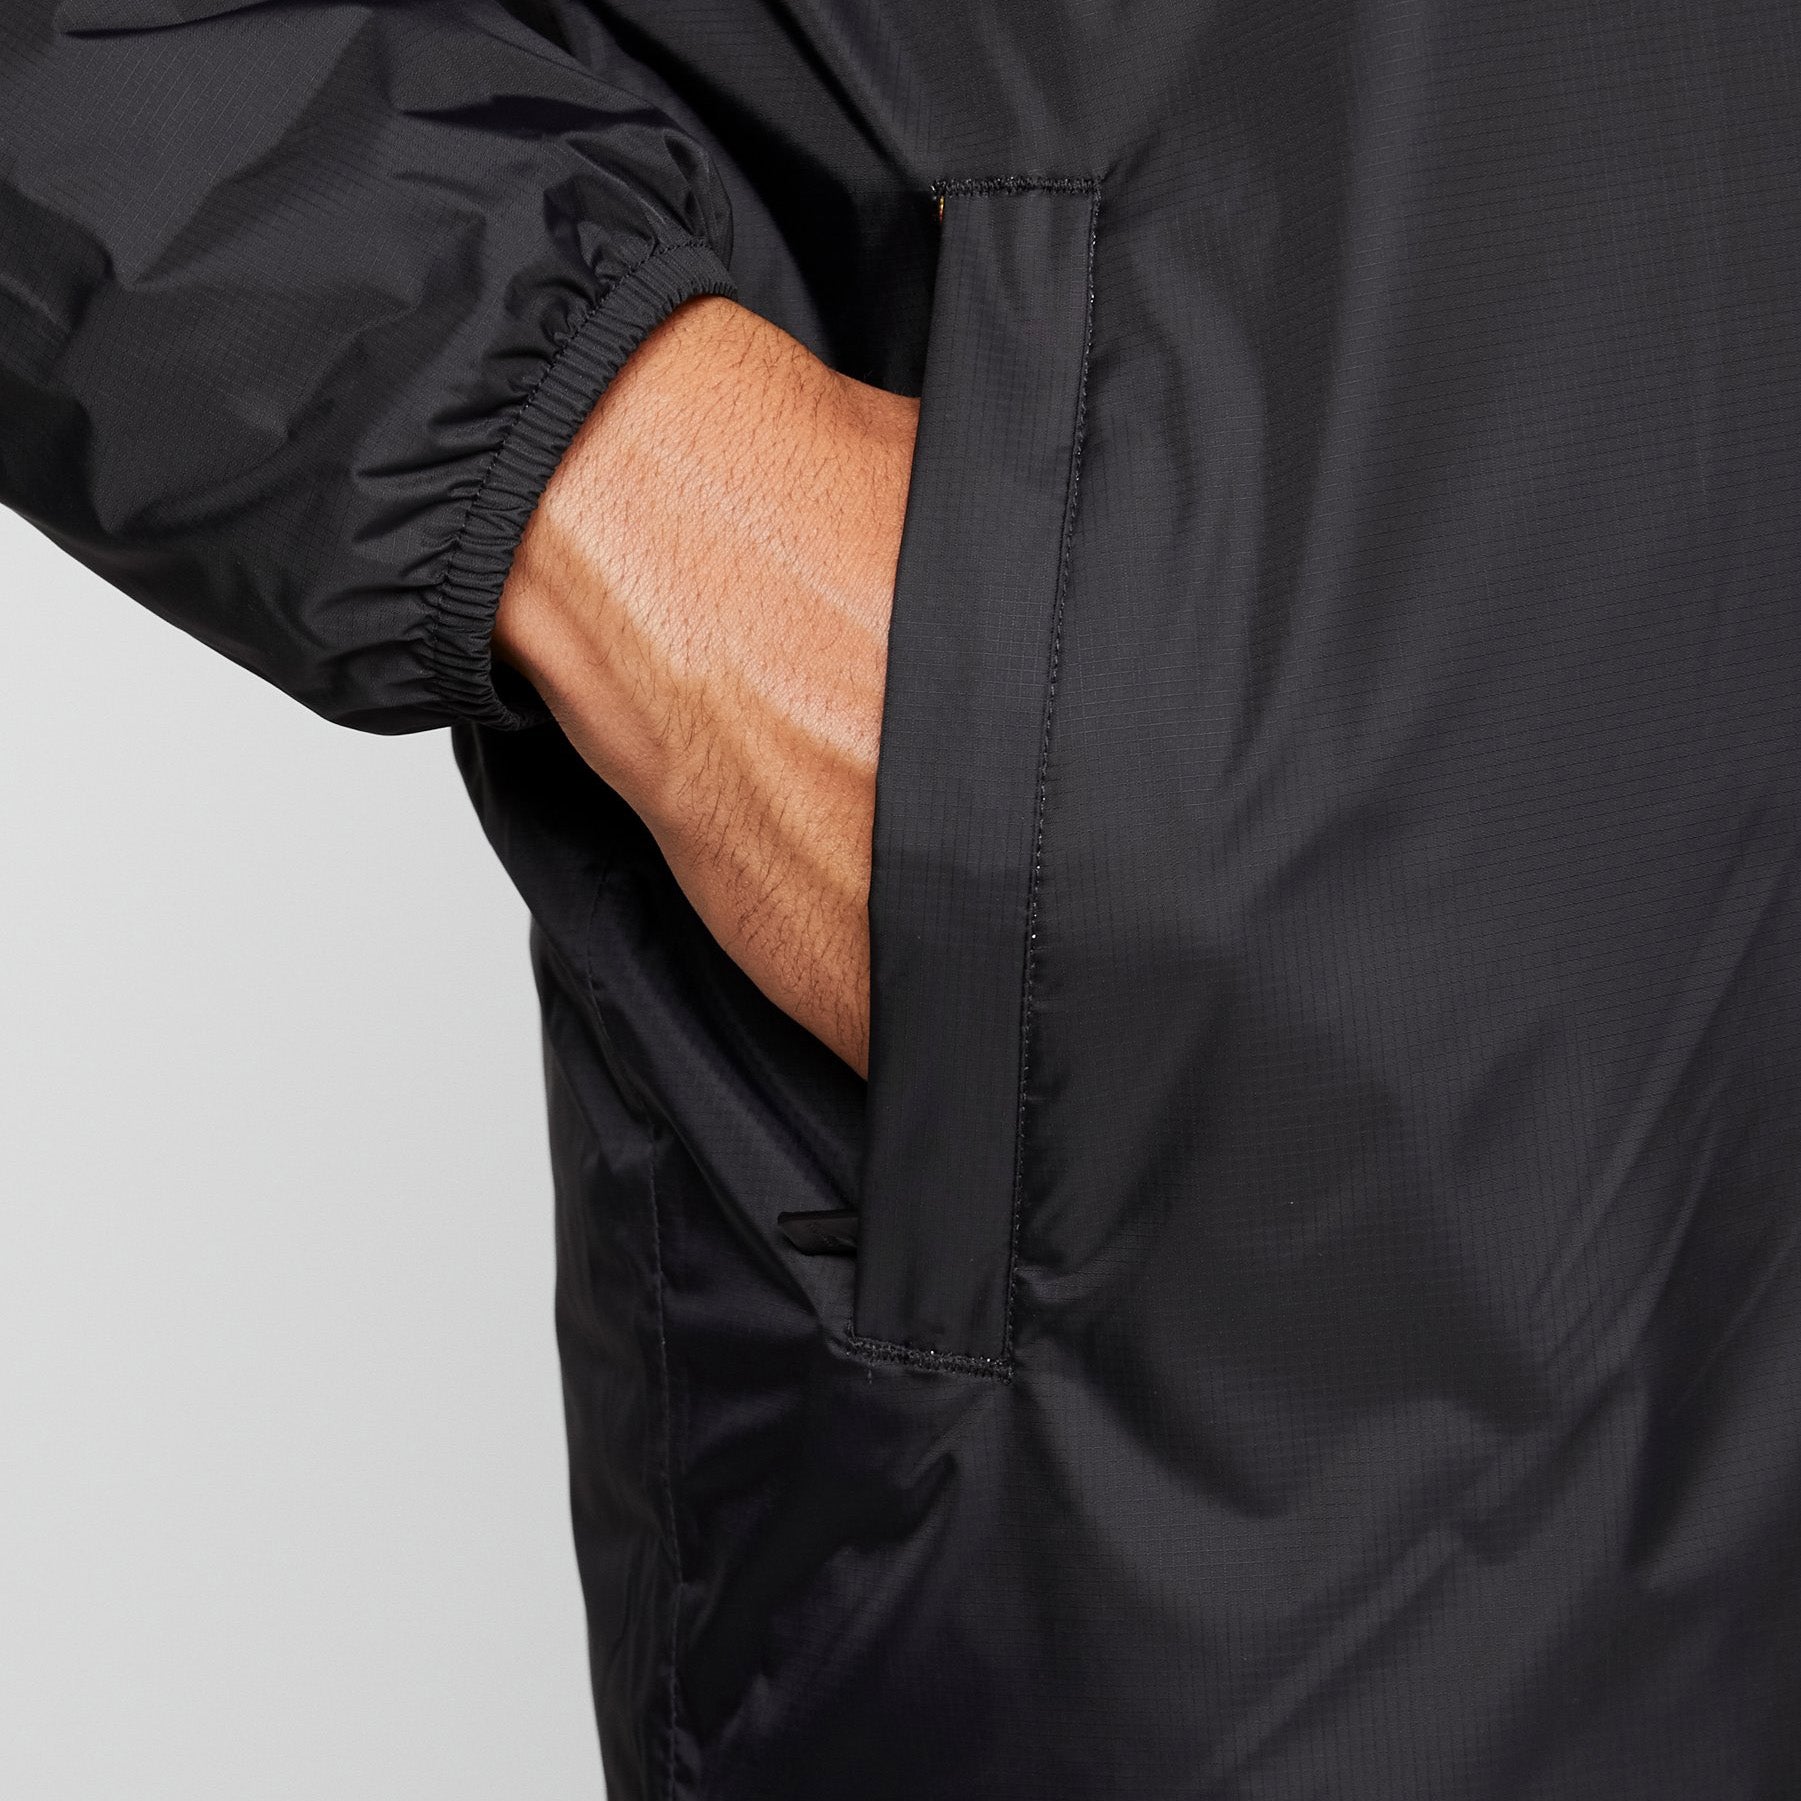 Eiffel Orsetto - Unisex Packable Lined Long Rain Jacket in Black